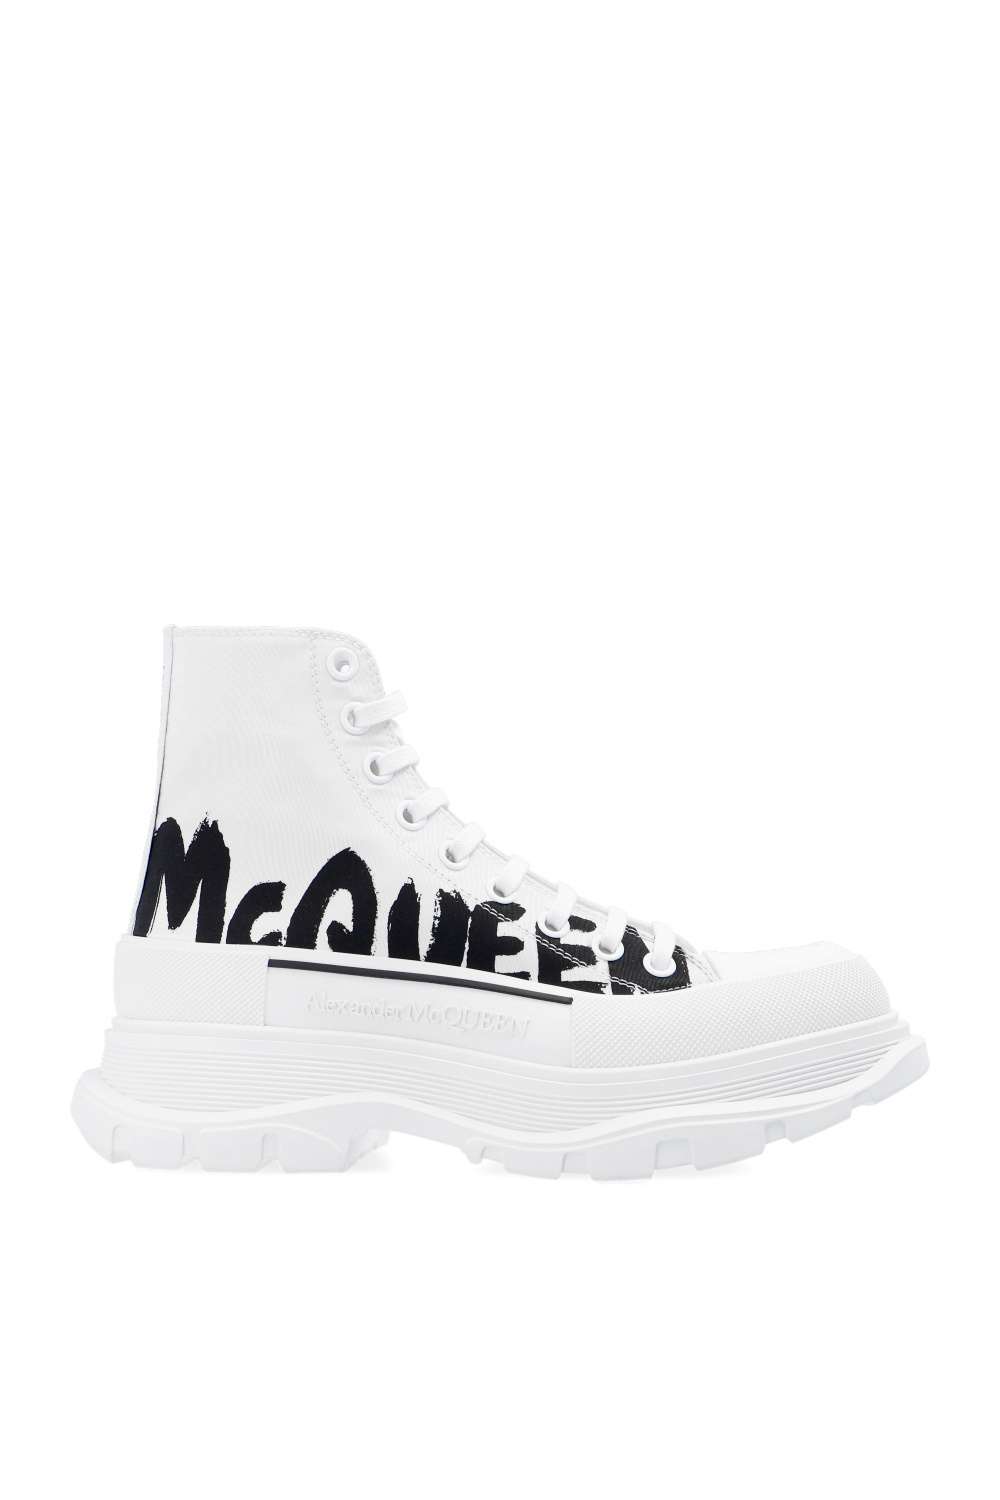 erstatte ballon Perversion Alexander McQueen Platform sneakers | Men's Shoes | Vitkac